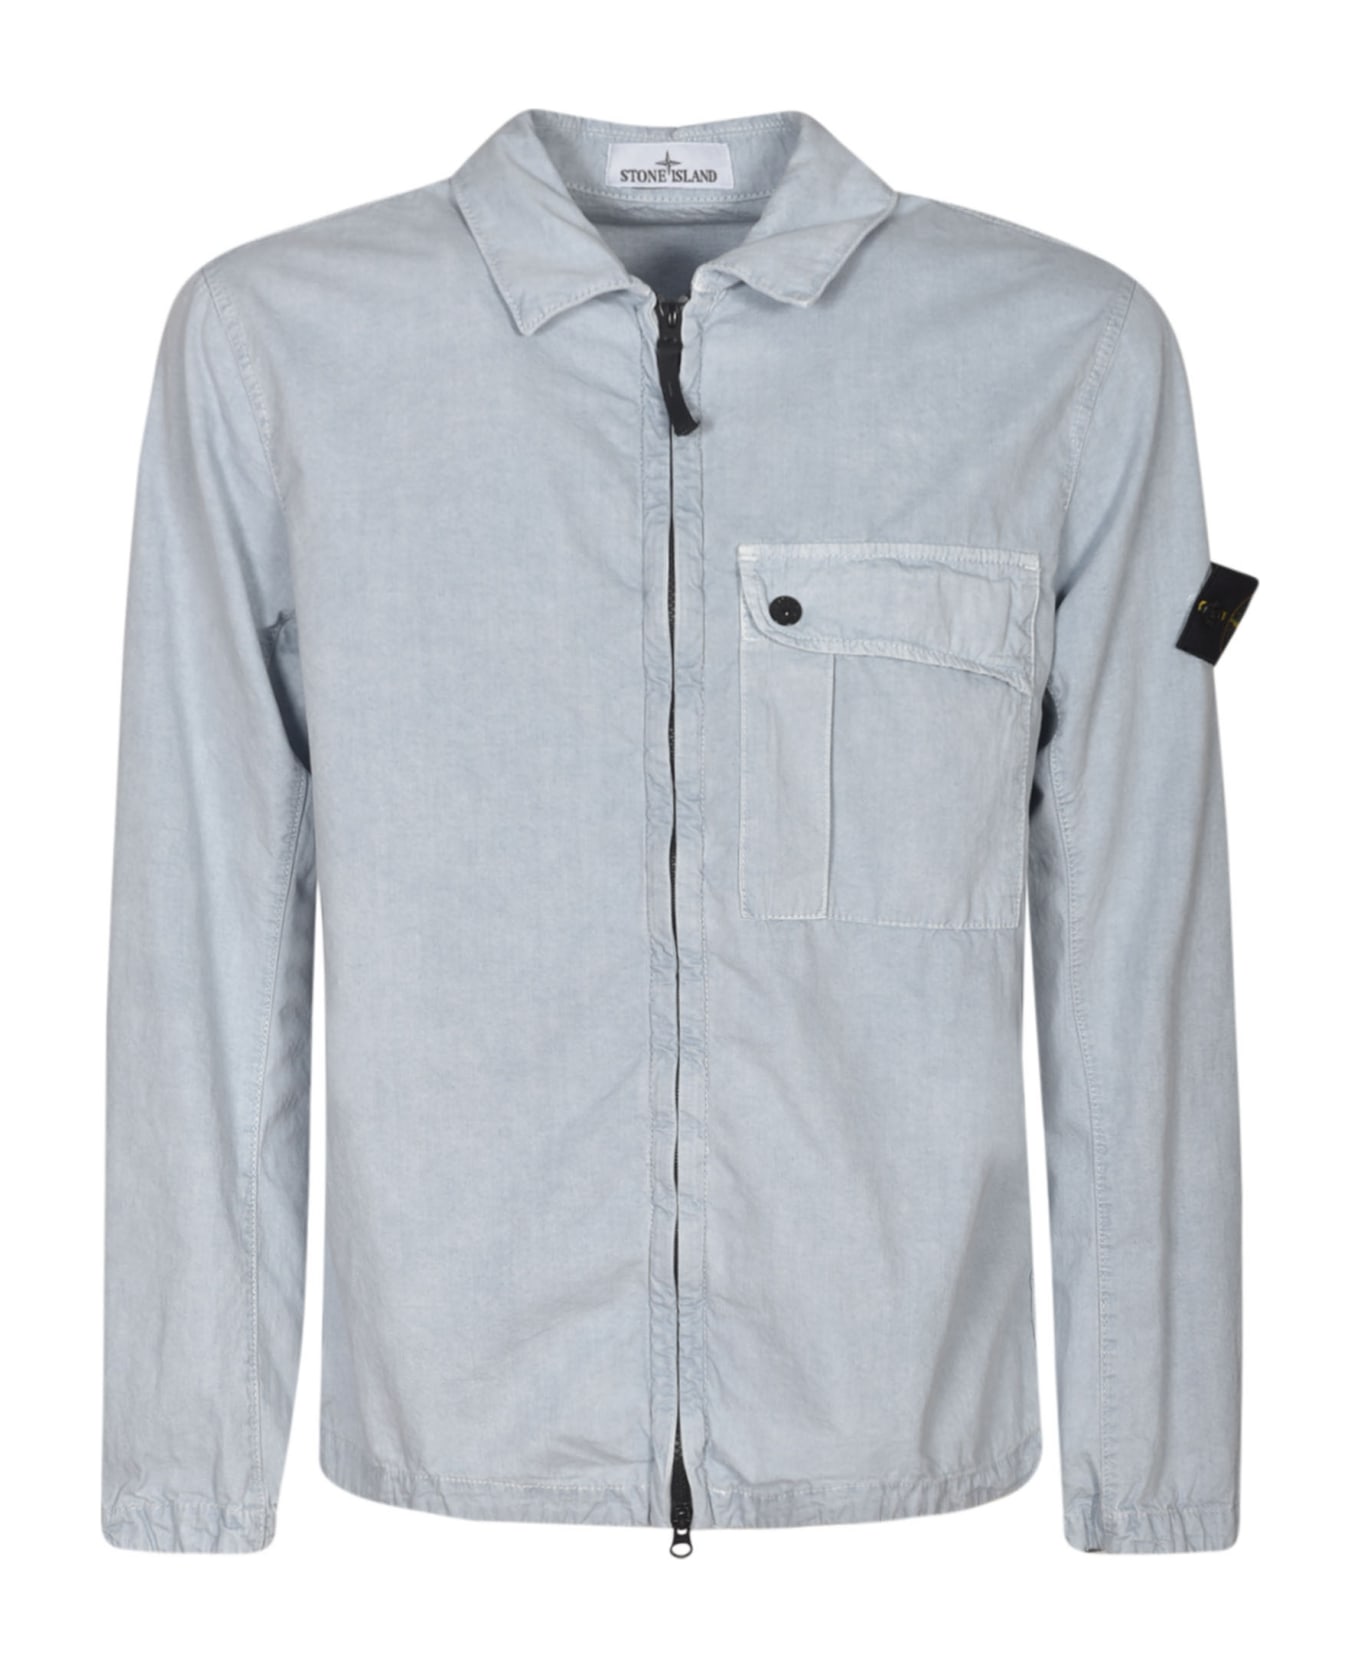 Stone Island Pocket Zipped Oversized Shirt - Sky Blue シャツ